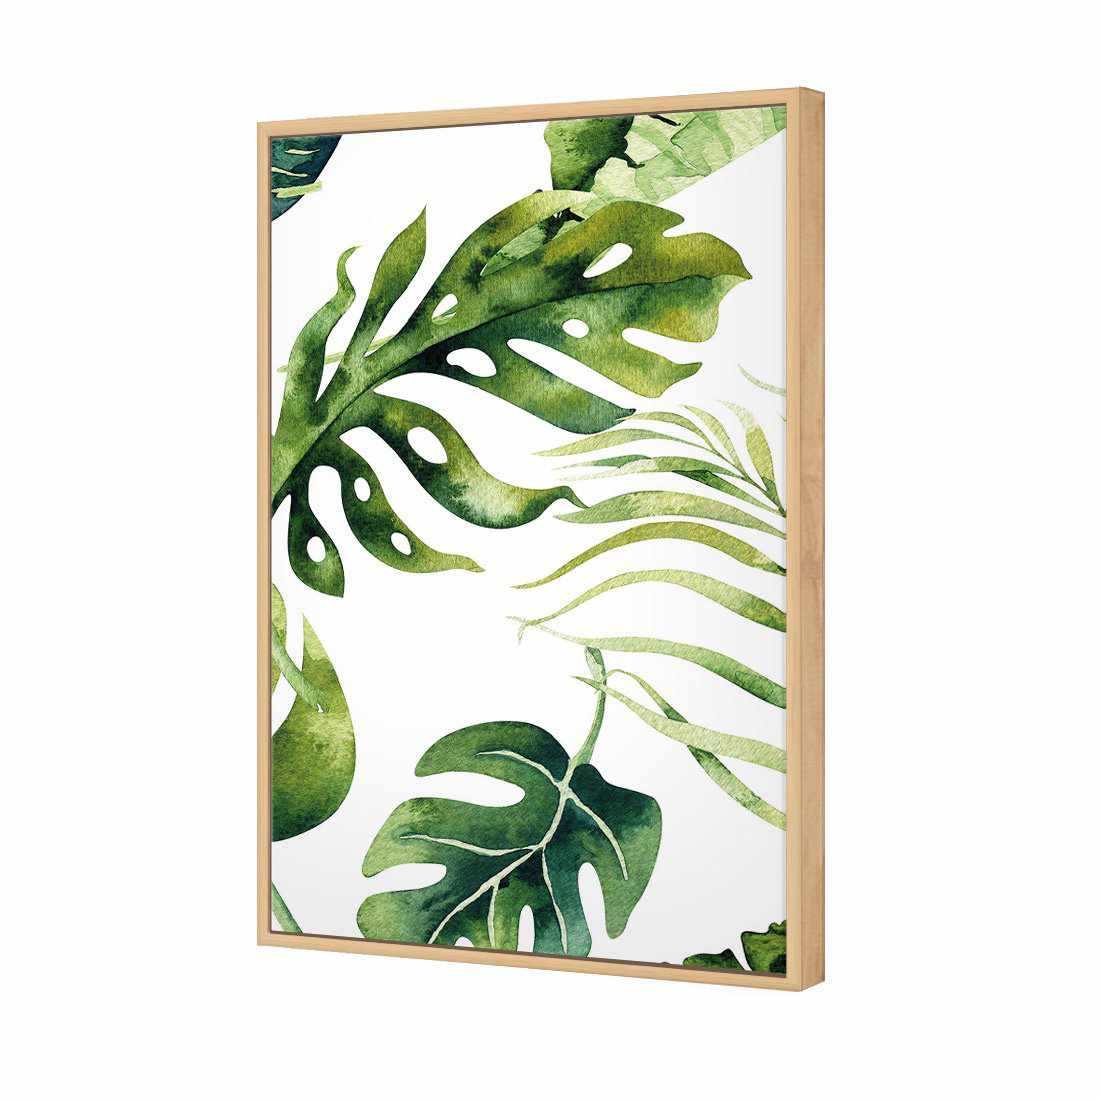 Fascinating Foliage Version 01 Canvas Art-Canvas-Wall Art Designs-45x30cm-Canvas - Oak Frame-Wall Art Designs